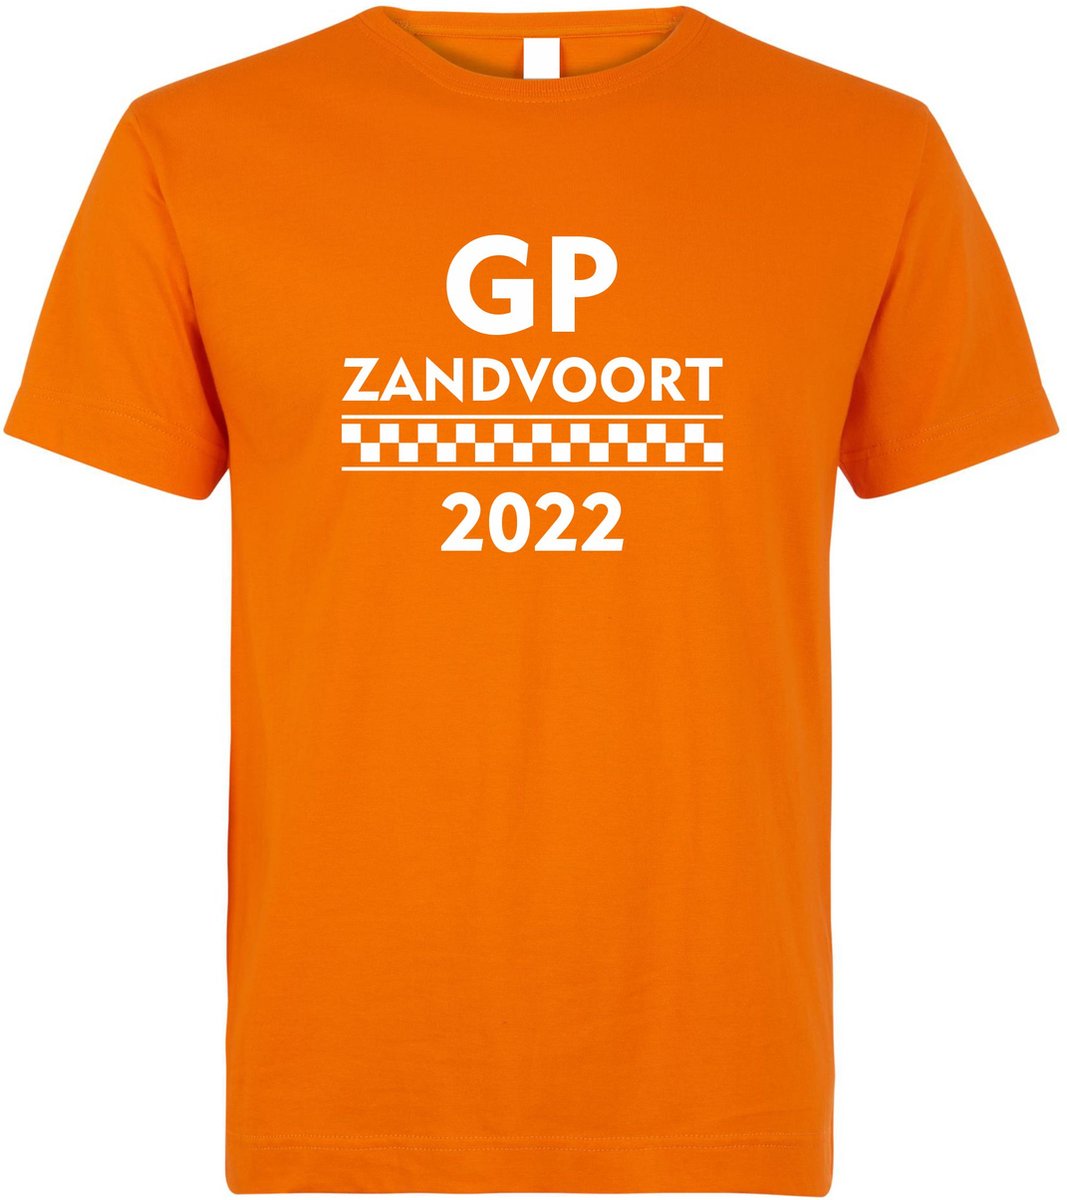 T-shirt kinderen GP Zandvoort 2022 | Max Verstappen / Red Bull Racing / Formule 1 fan | Grand Prix Circuit Zandvoort | kleding shirt | Oranje | maat 68